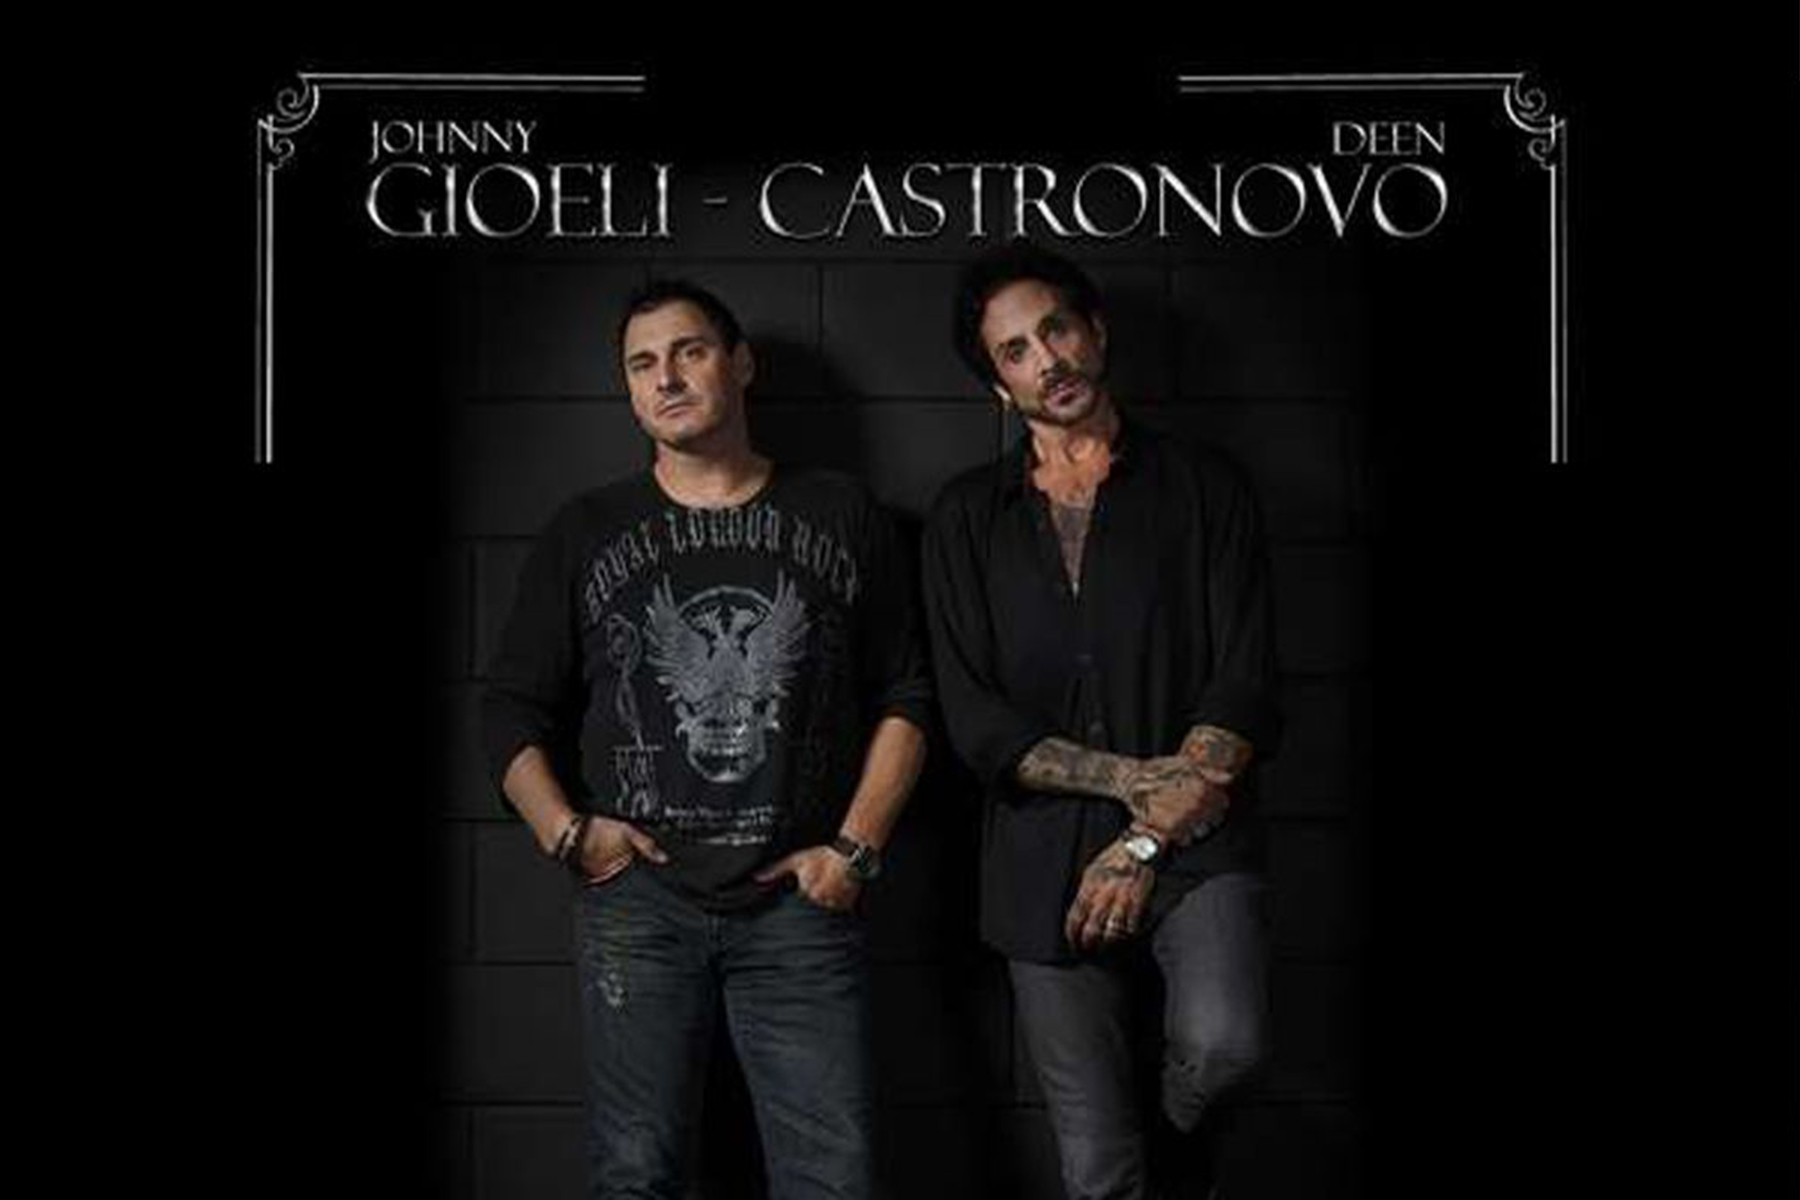 GIOELI - CASTRONOVO Announce Debut Album, 